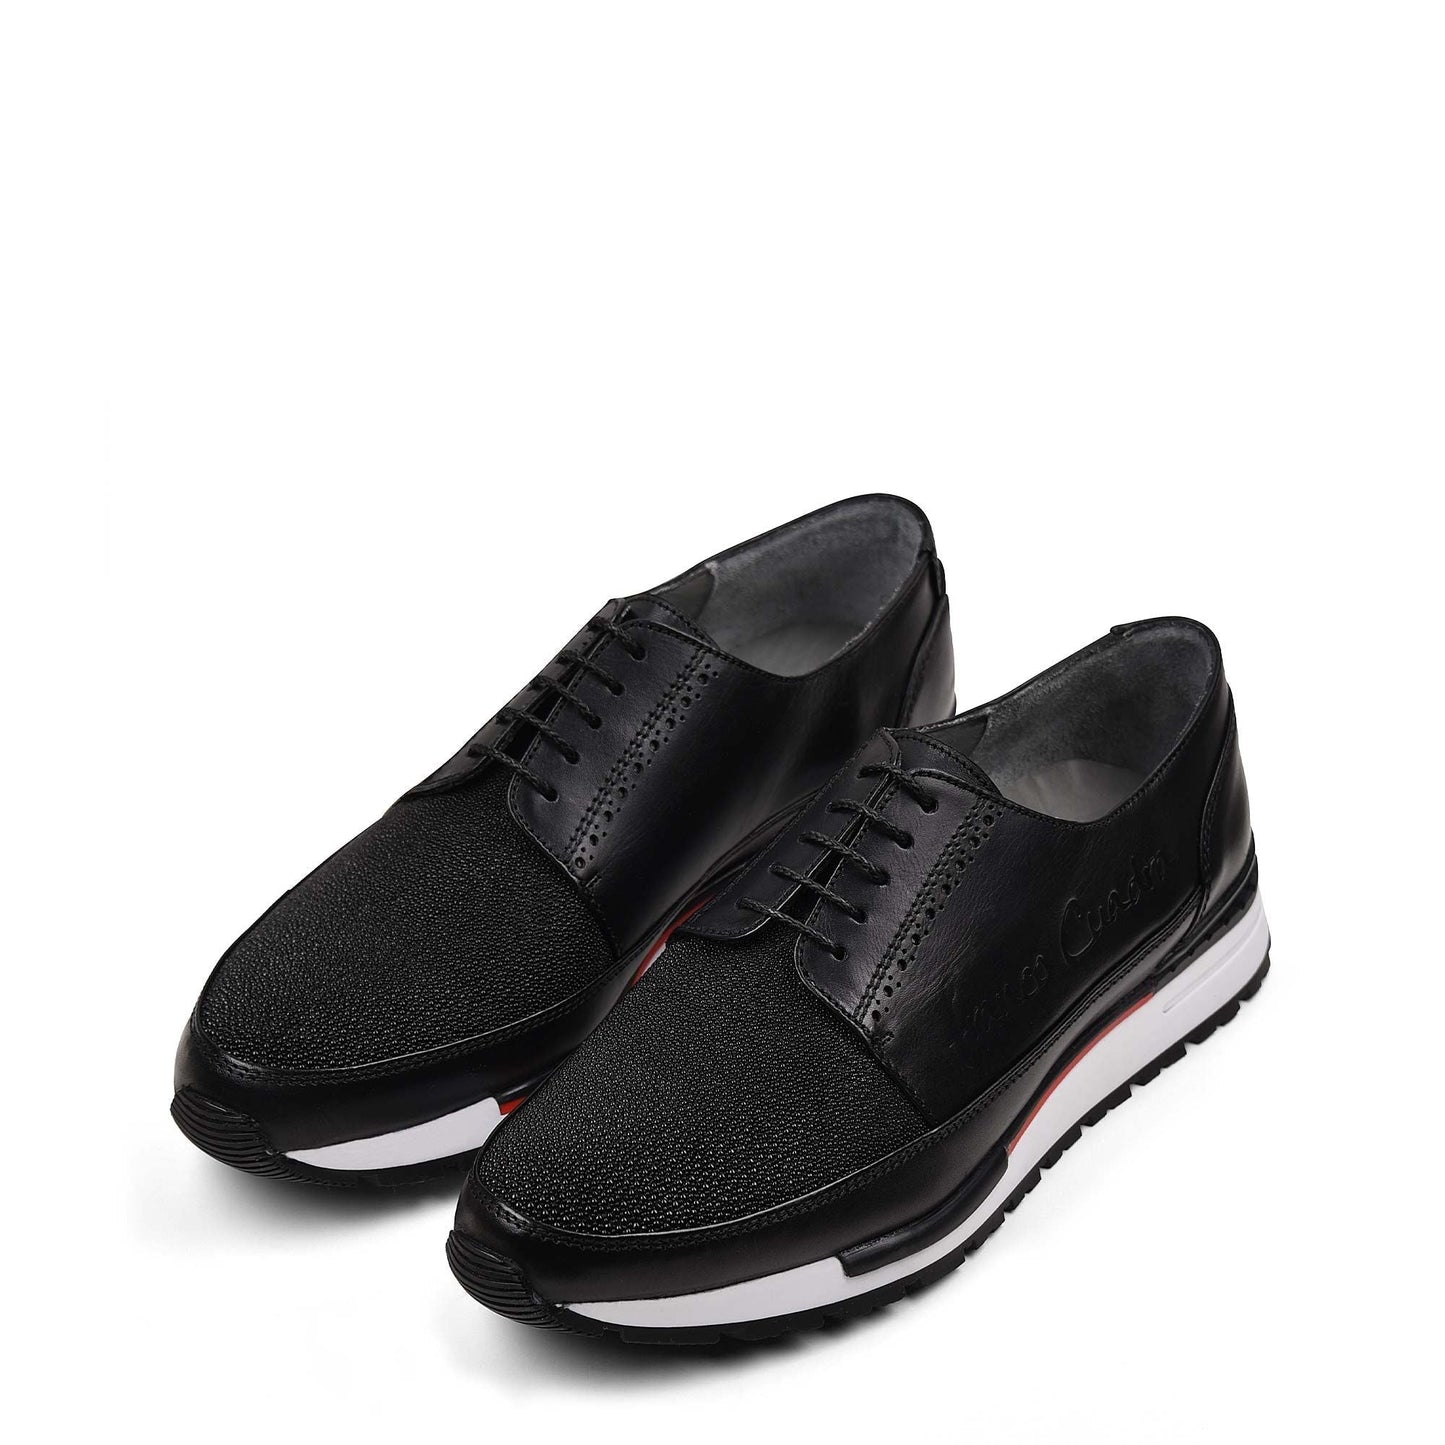 127MTTS - Cuadra black casual fashion stingray derby sneakers for men-FRANCO CUADRA-Kuet-Cuadra-Boots